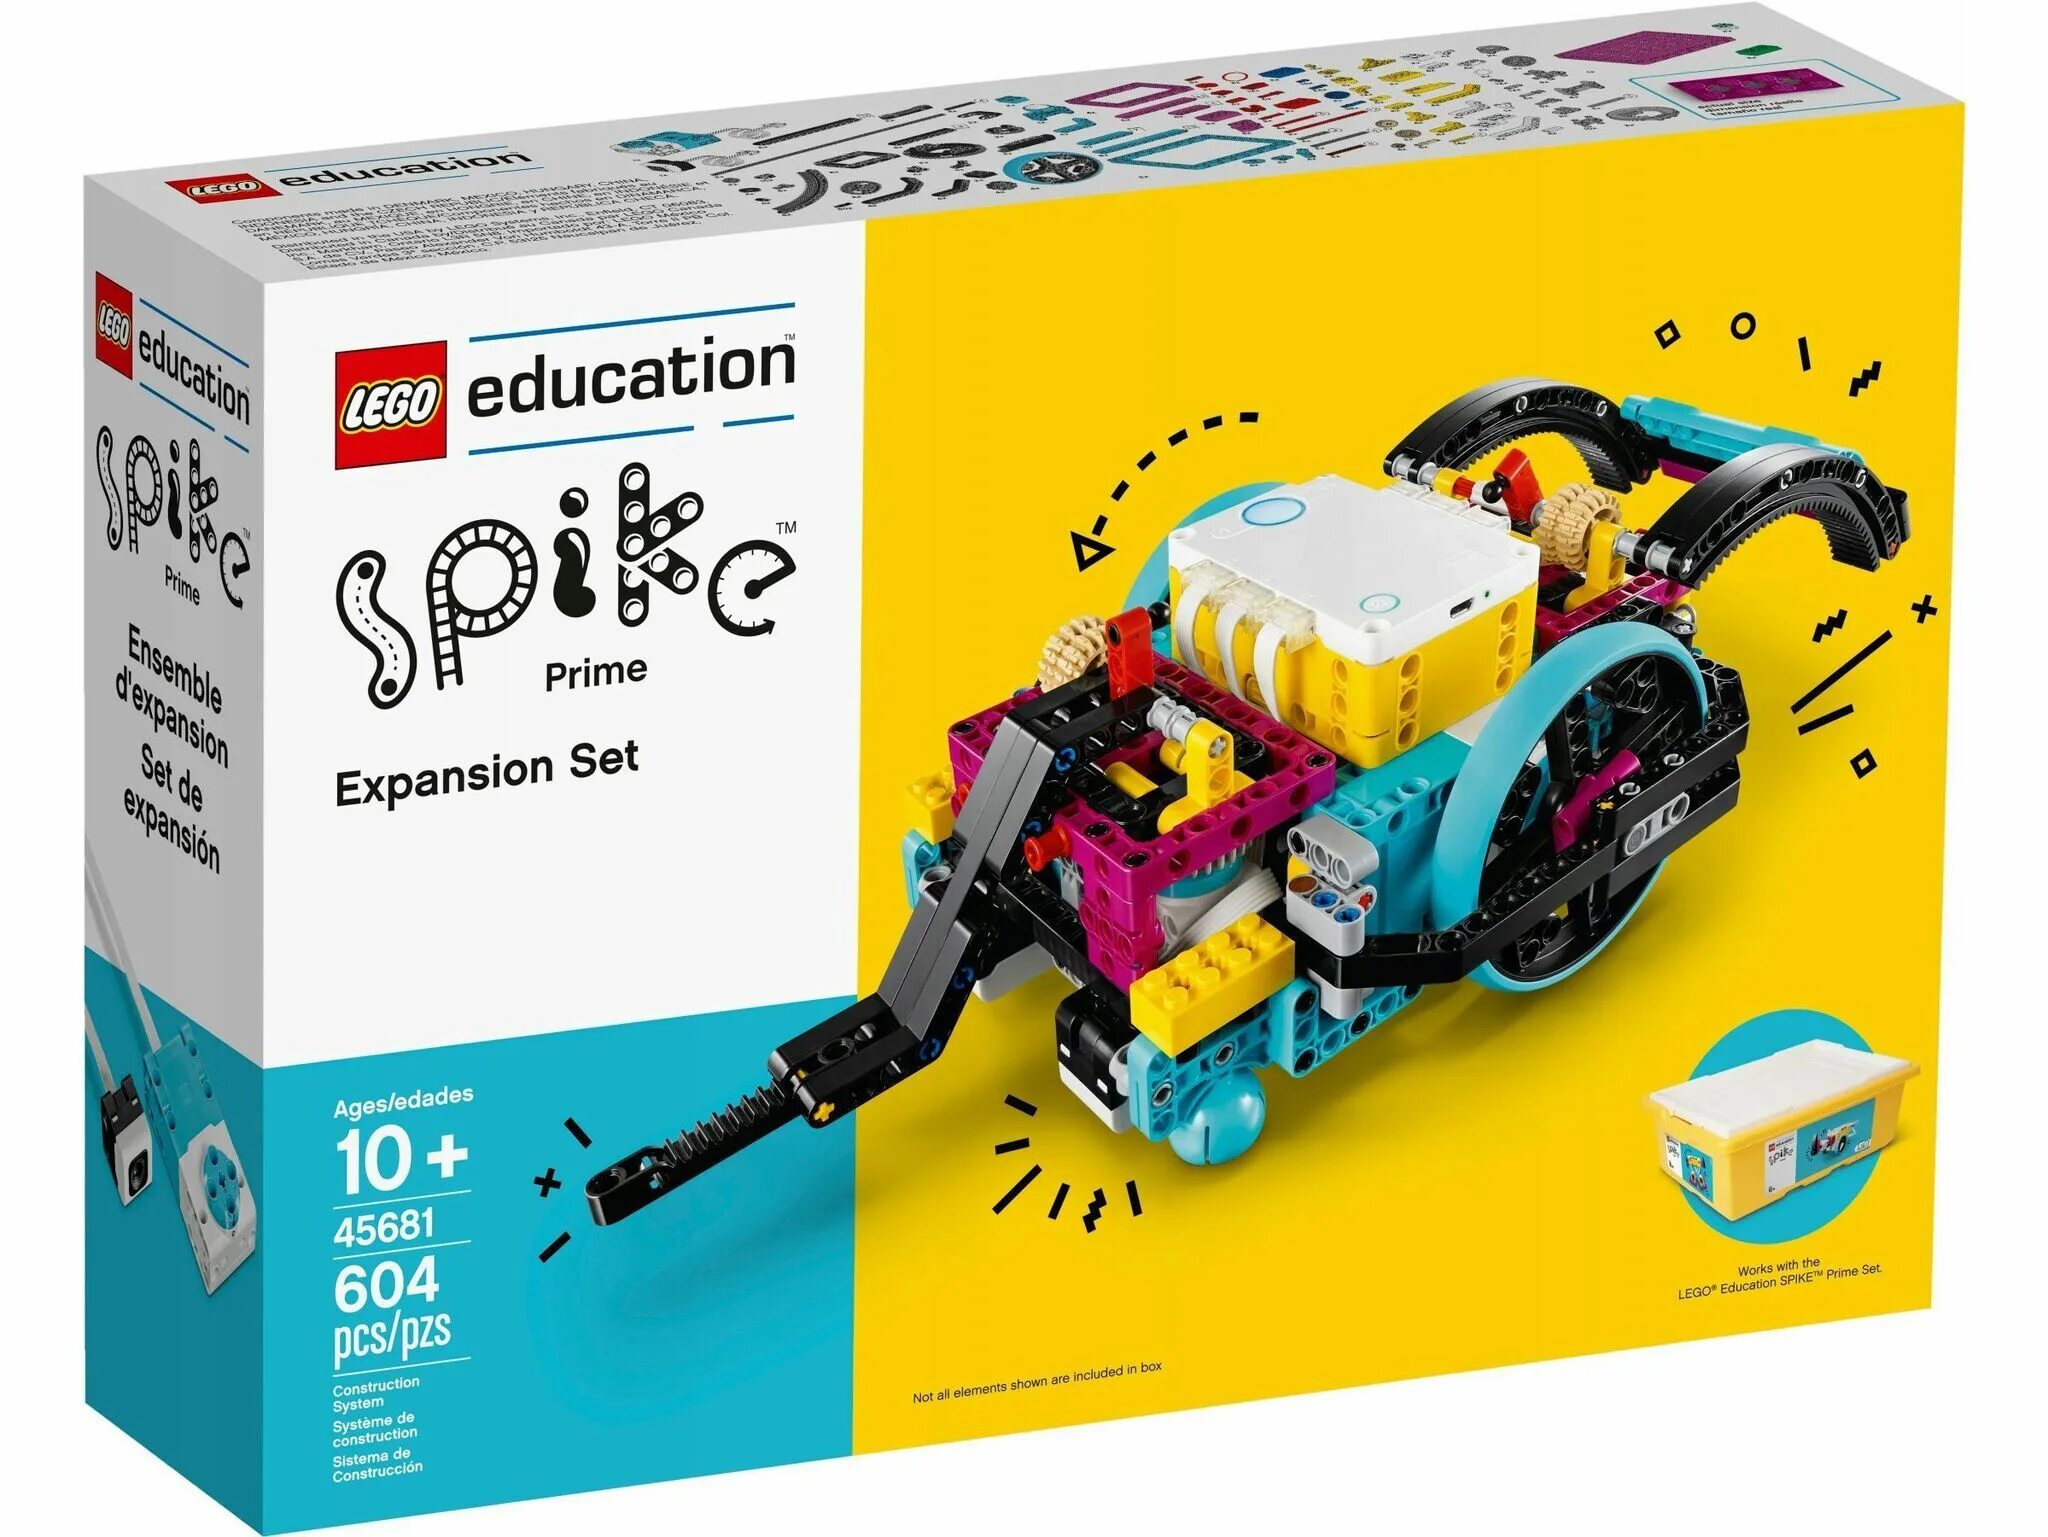 Спайк прайм. Ресурсный набор LEGO Education Spike Prime лего-45680. Базовый набор LEGO® Education Spike™ Prime. Конструктор LEGO Education Spike Prime 45681 ресурсный набор расширенный. LEGO Спайк Прайм.